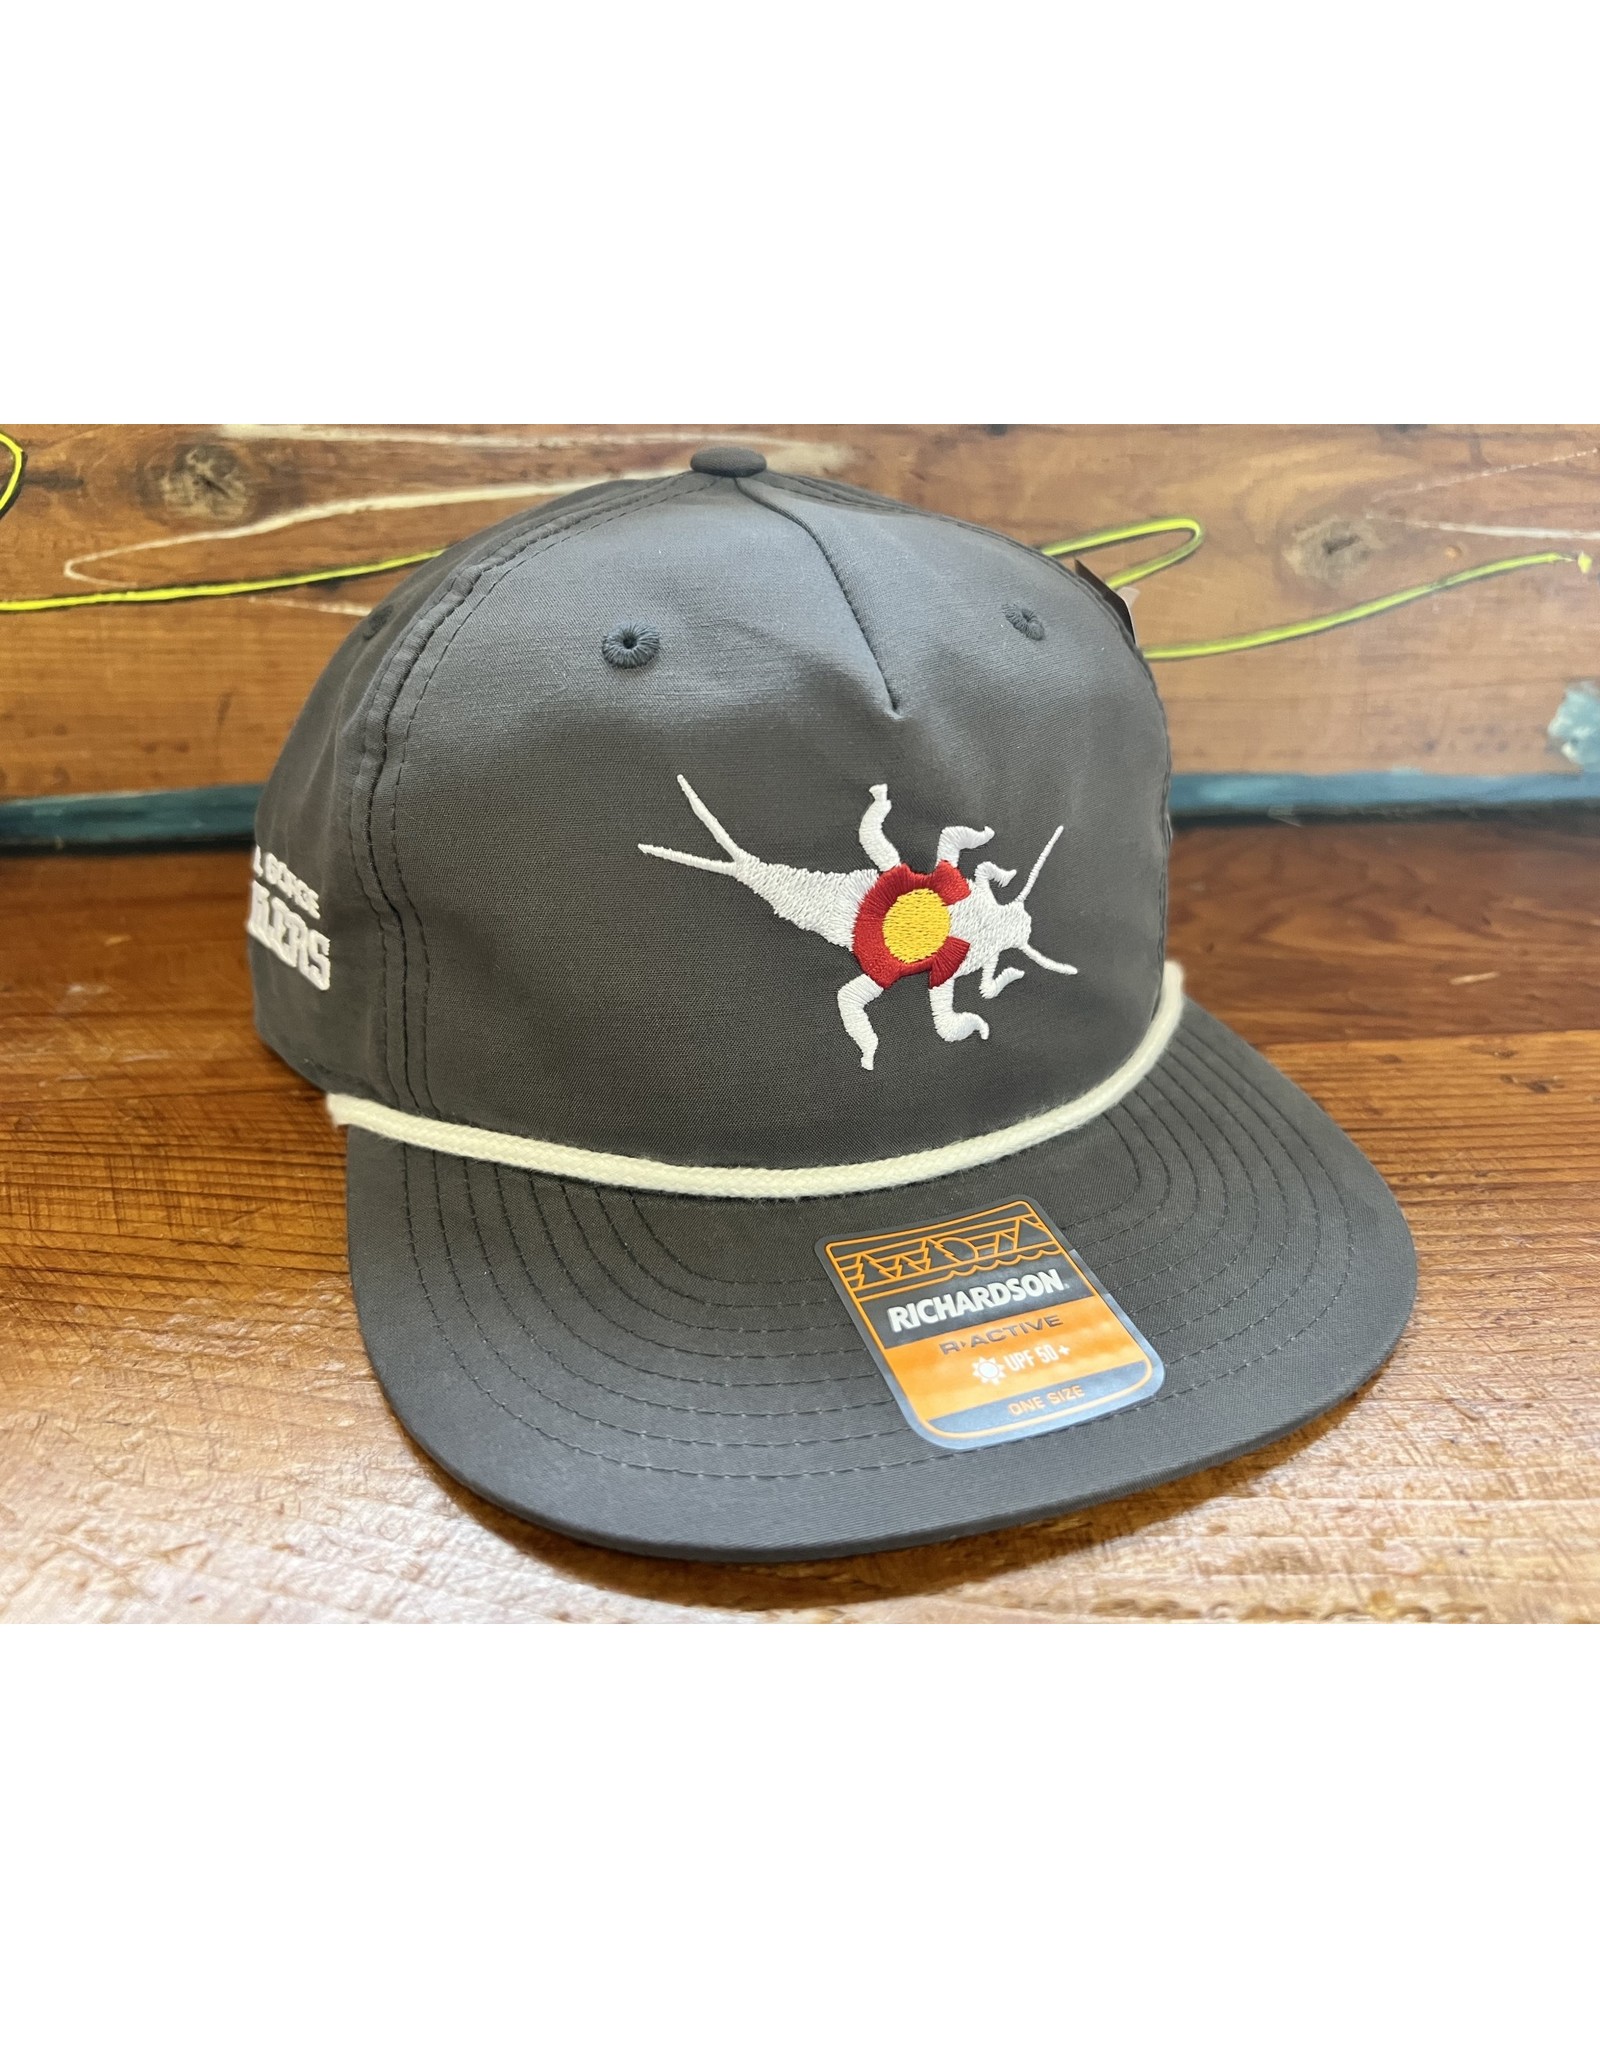 Richardson NEW RGA Stonedaddy Camper Hat (Charcoal/ White)